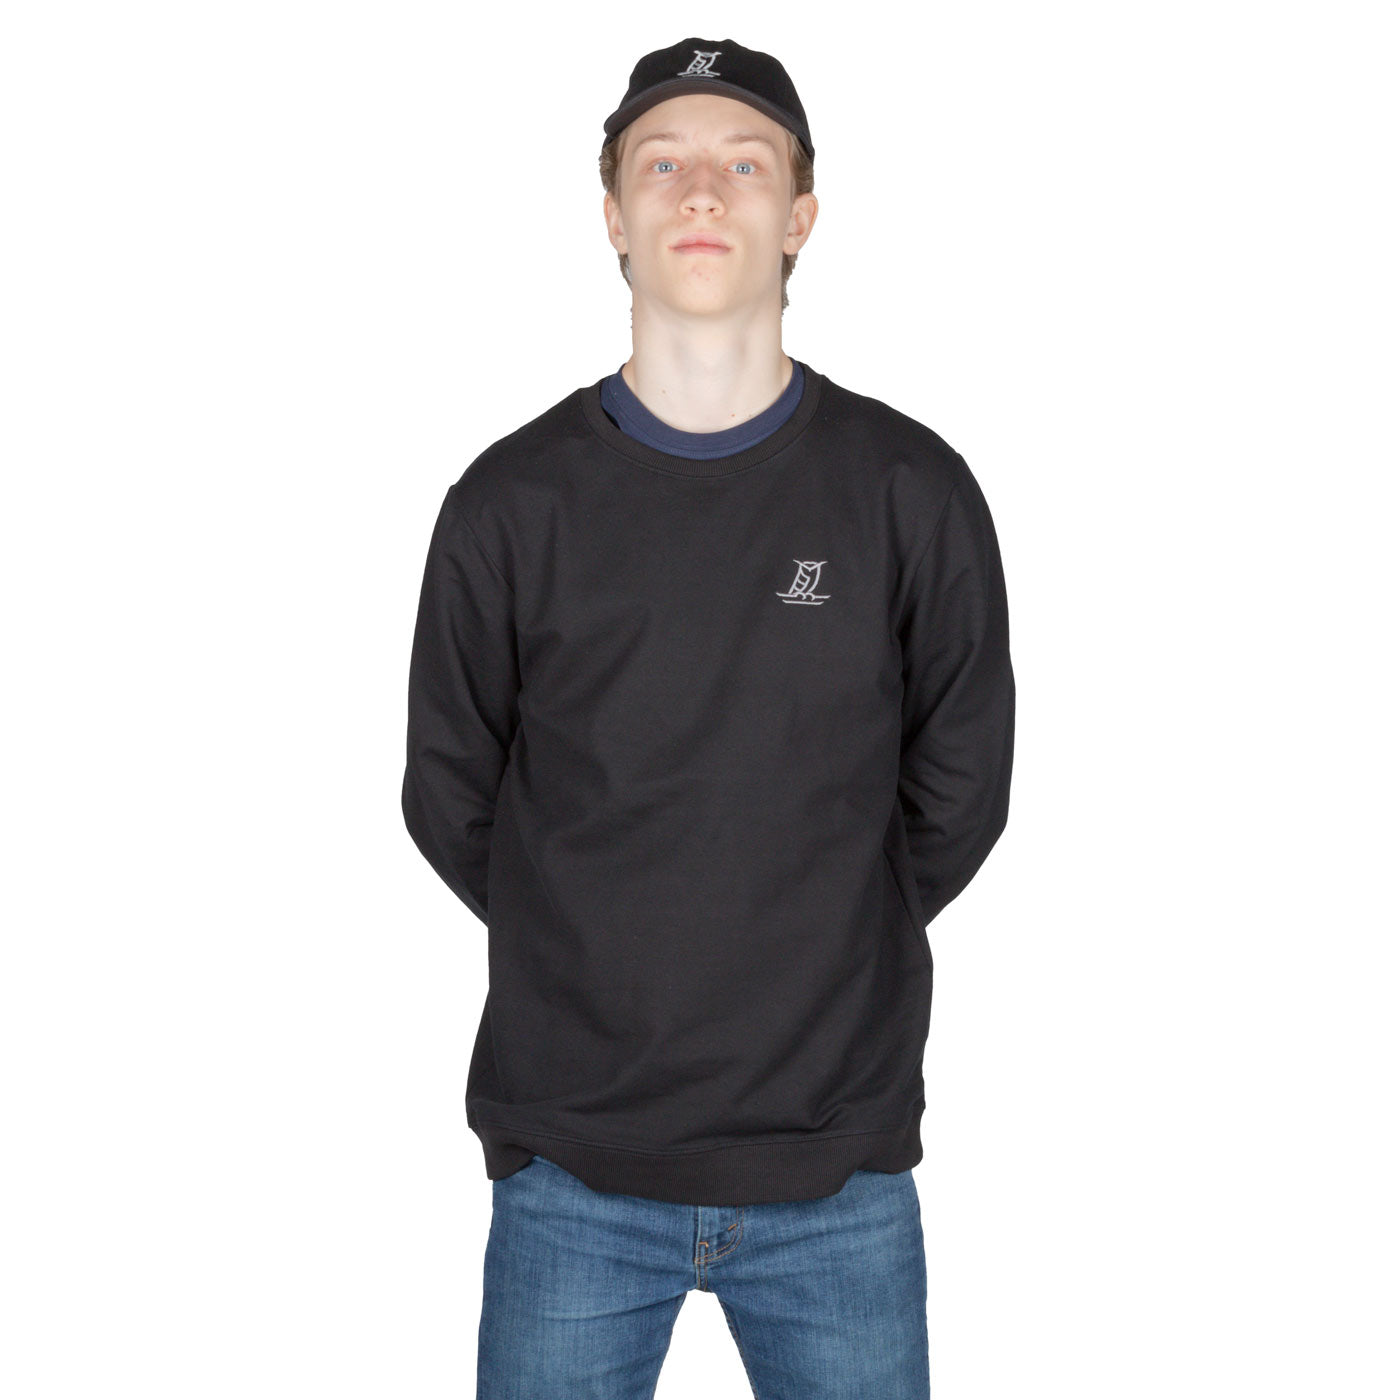 Bubi Sport Sweatshirt, Black